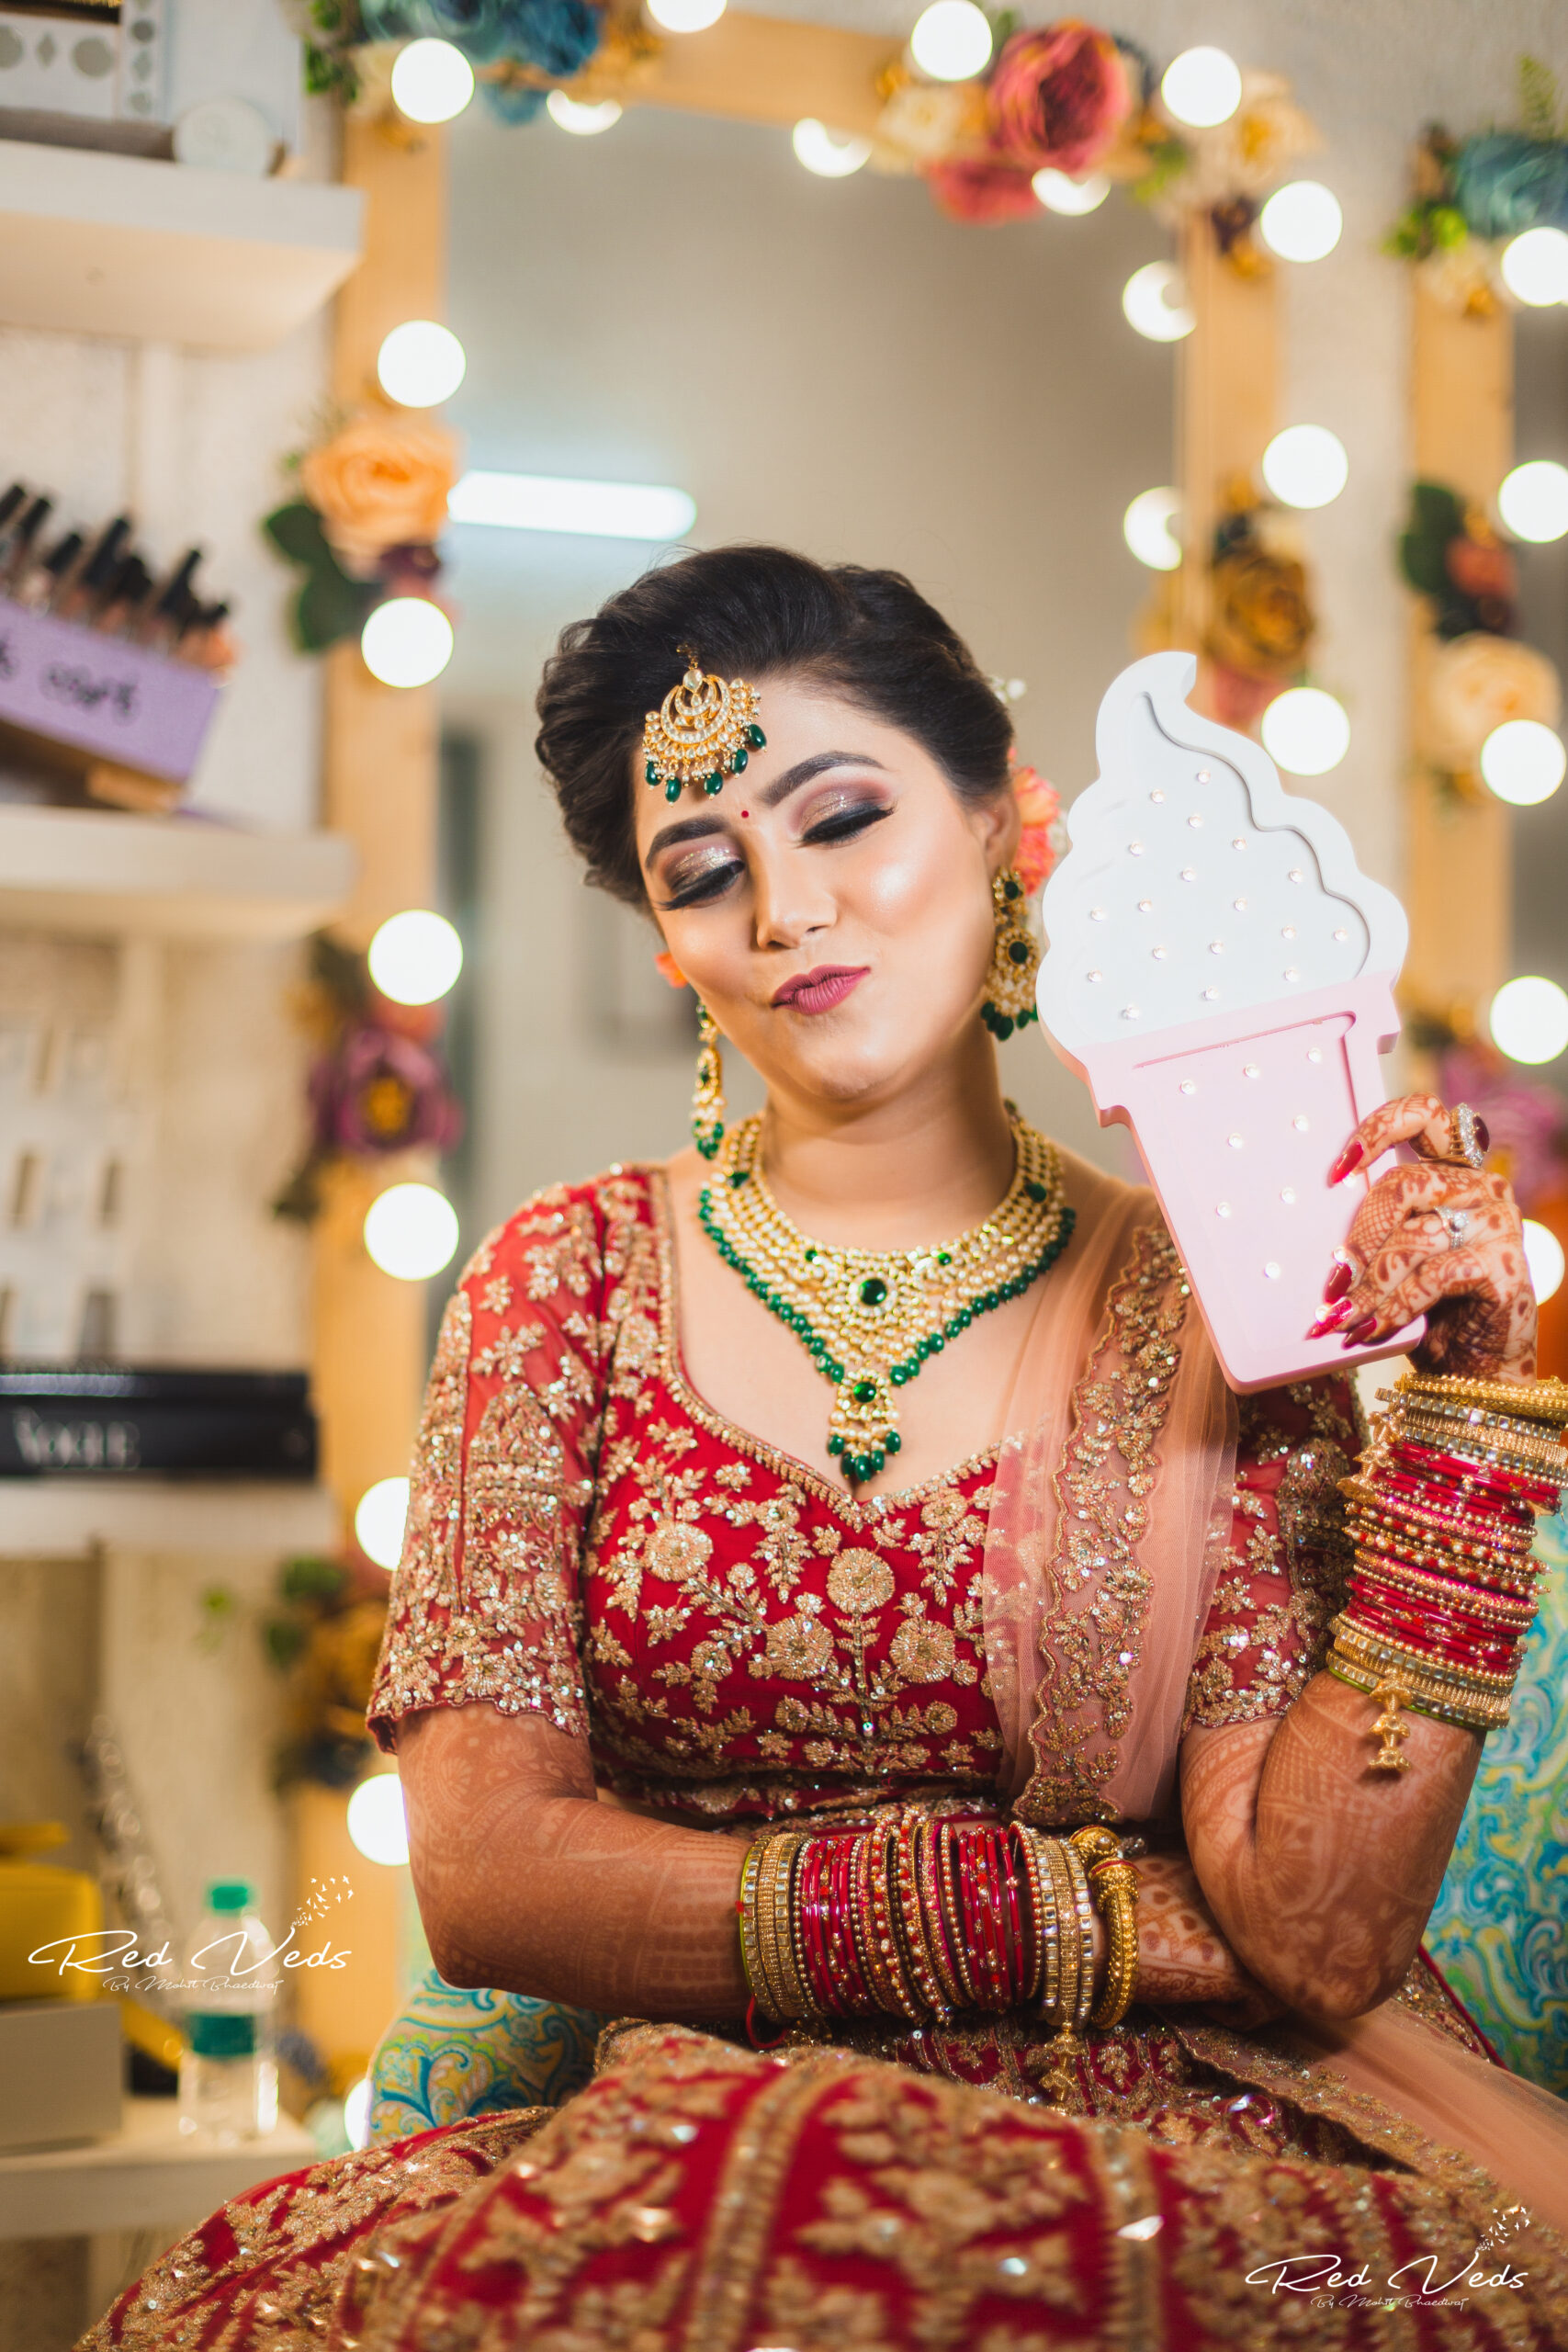 Pin by ramkumarpatwa on B | Indian bride photography poses, Indian bride  poses, Indian wedding poses